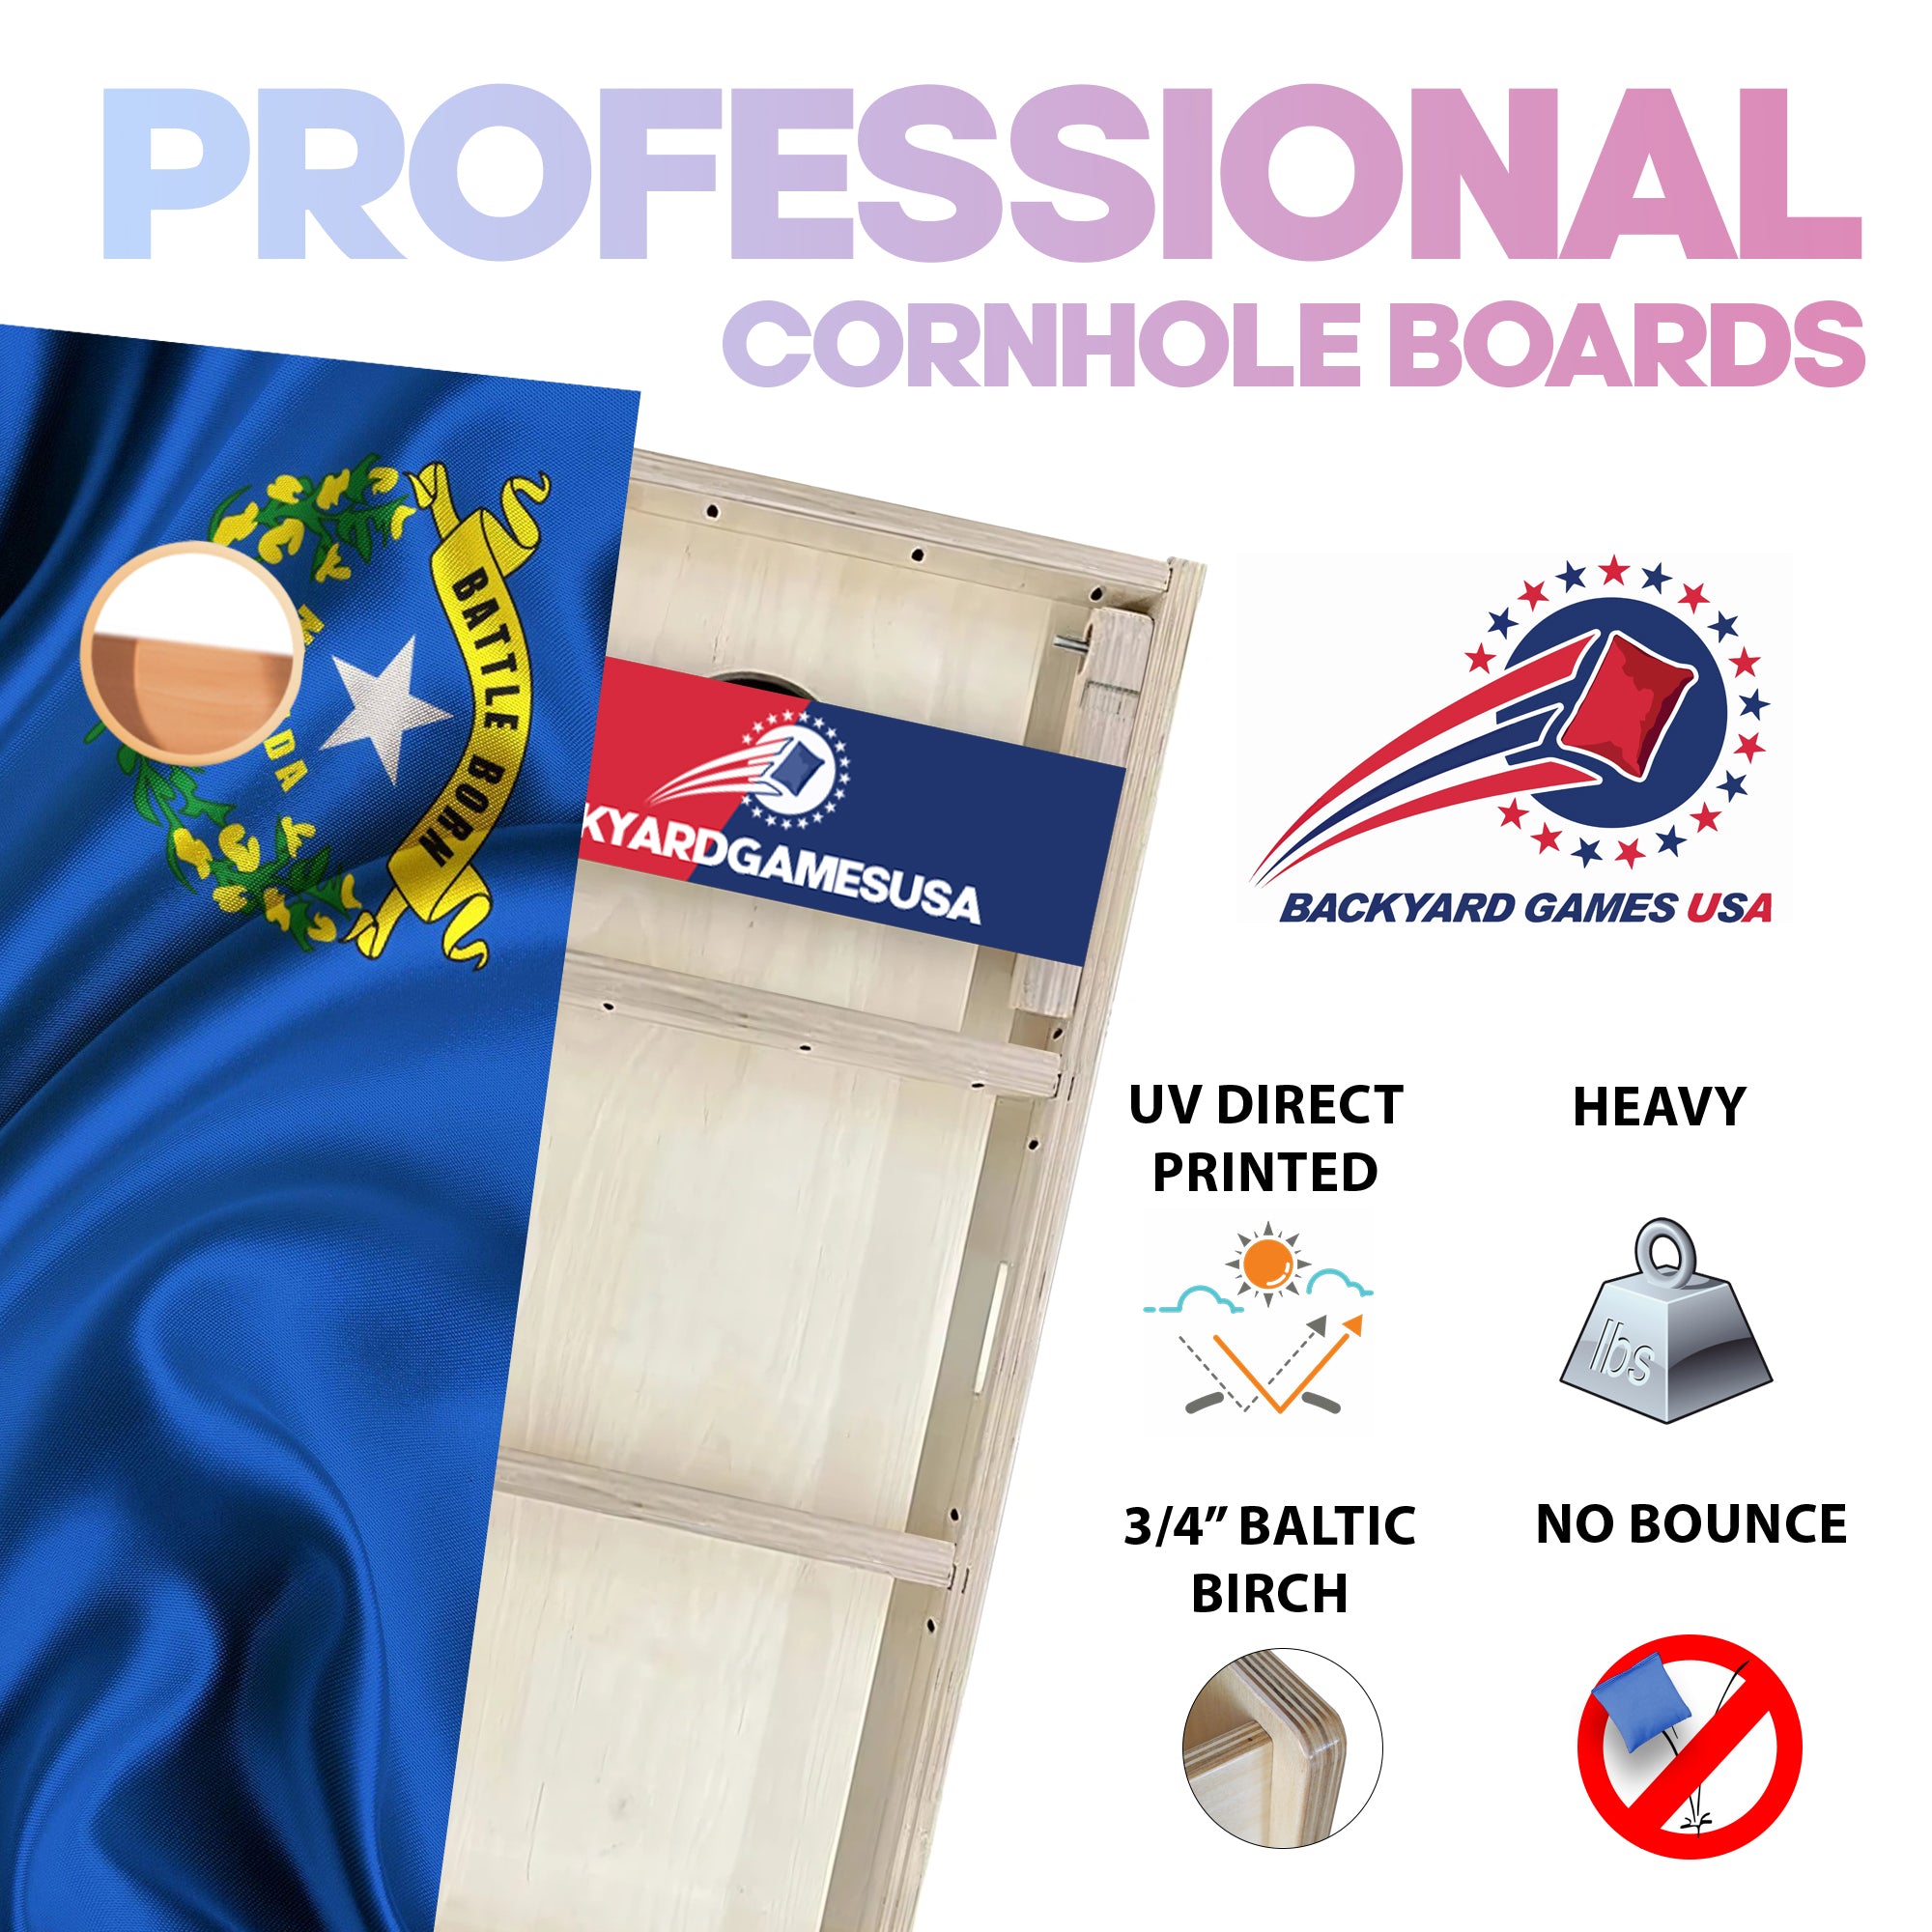 Nevada Professional Cornhole Boards